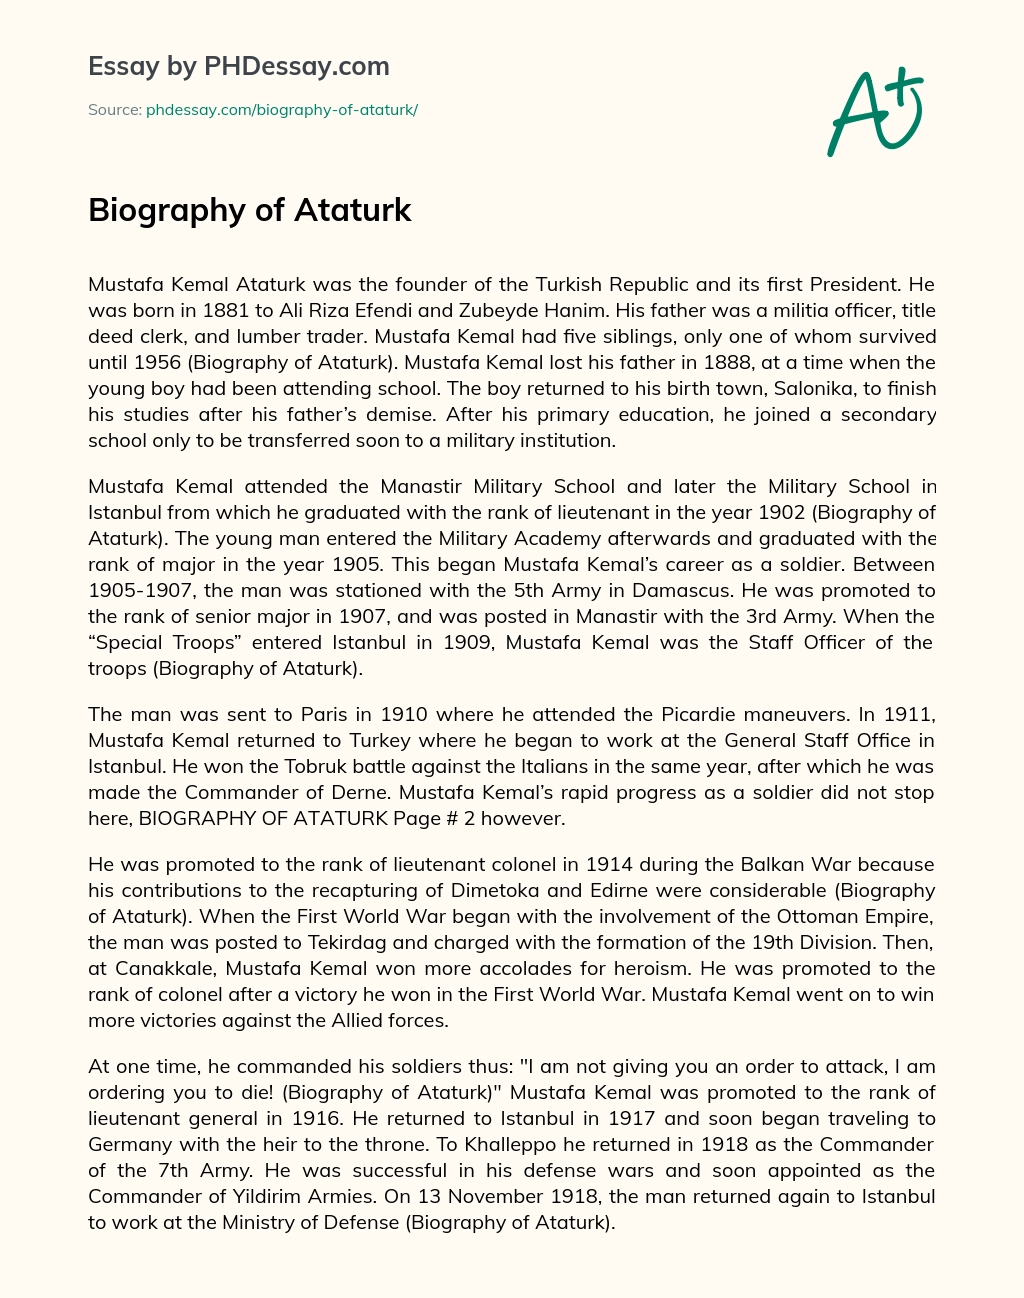 Biography of Ataturk essay